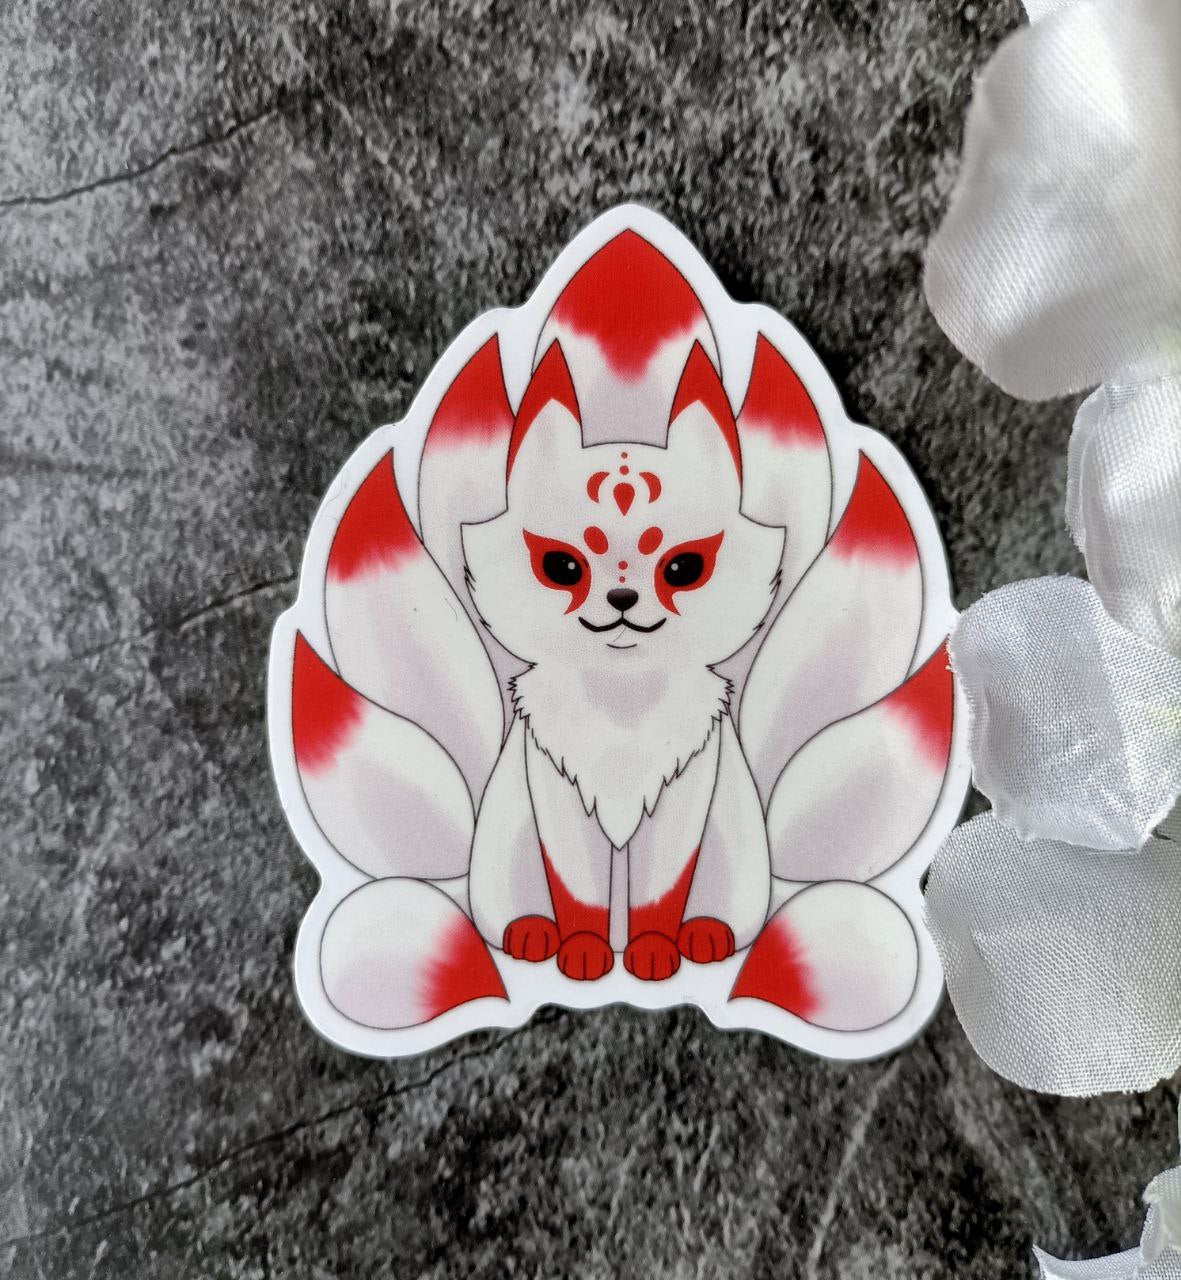 Sticker "Kitsune" from End of Horizon